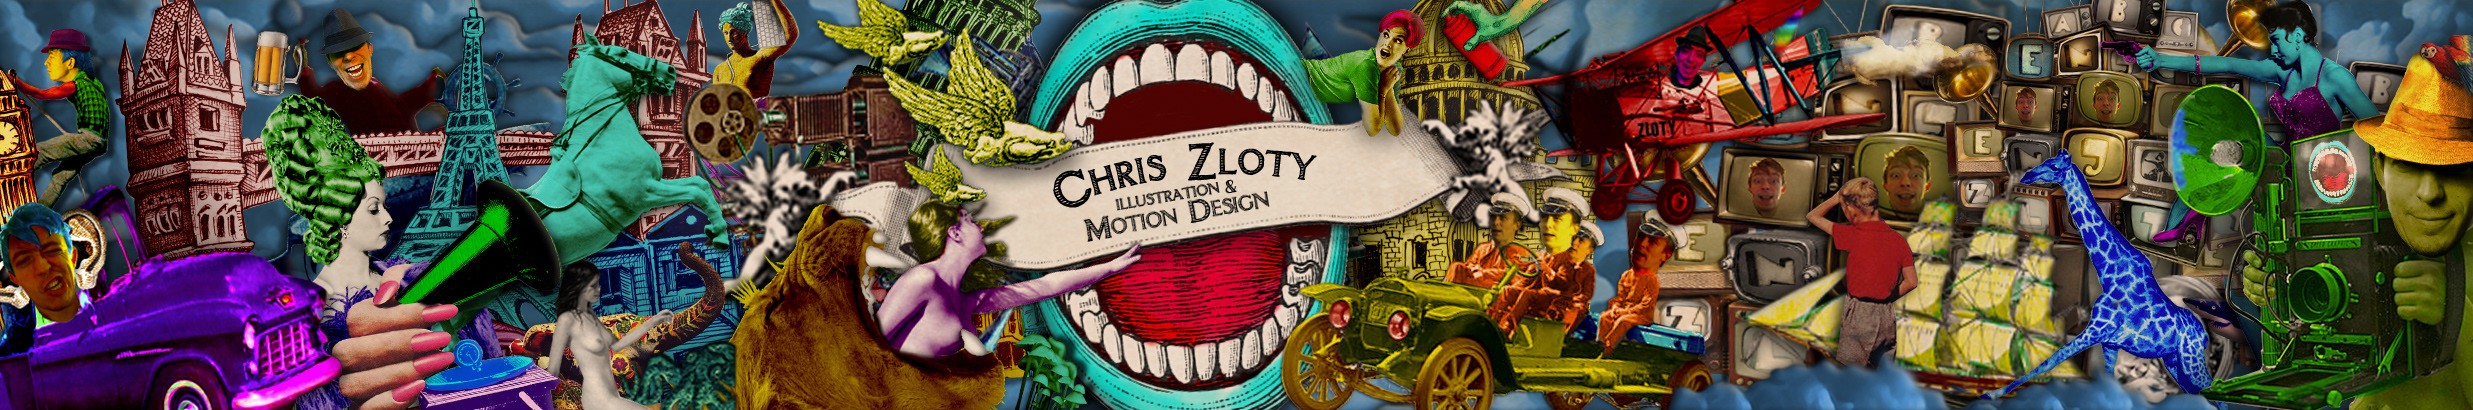 Chris Zloty Website